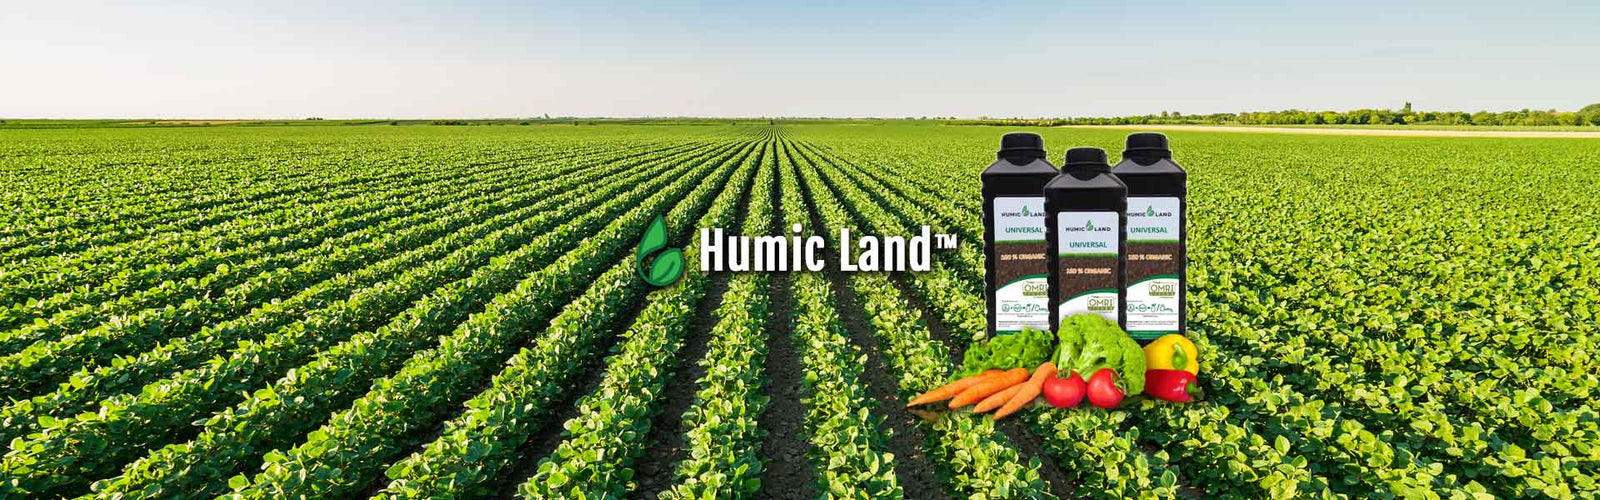 Humic Land Soil Amendment